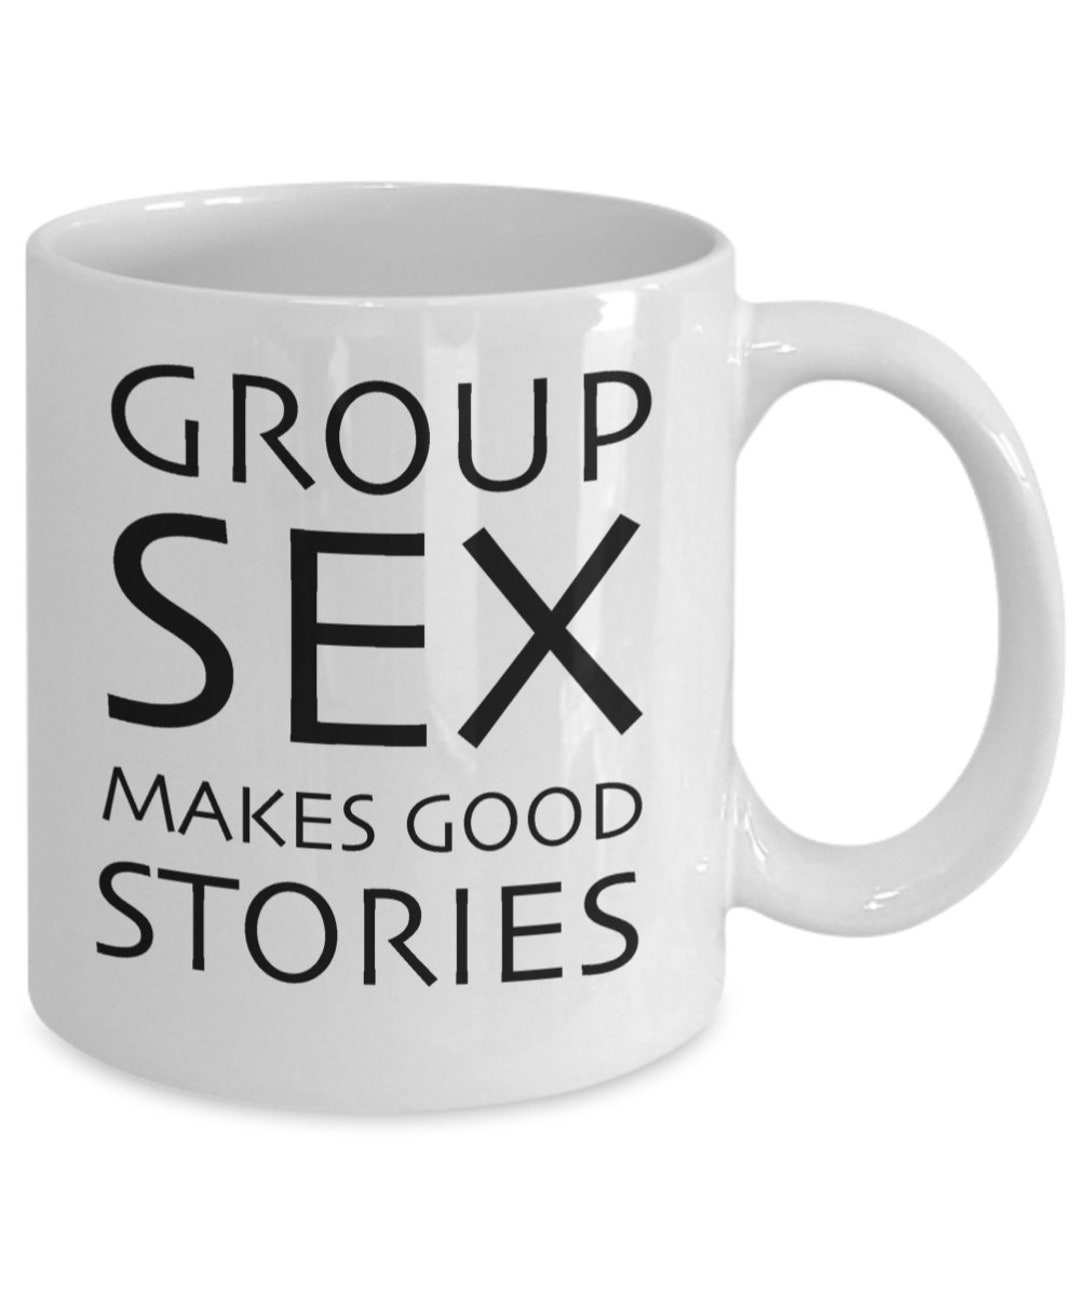 Group Sex Makes Good Stories / Swinger Mug / Funny Sex Gift image